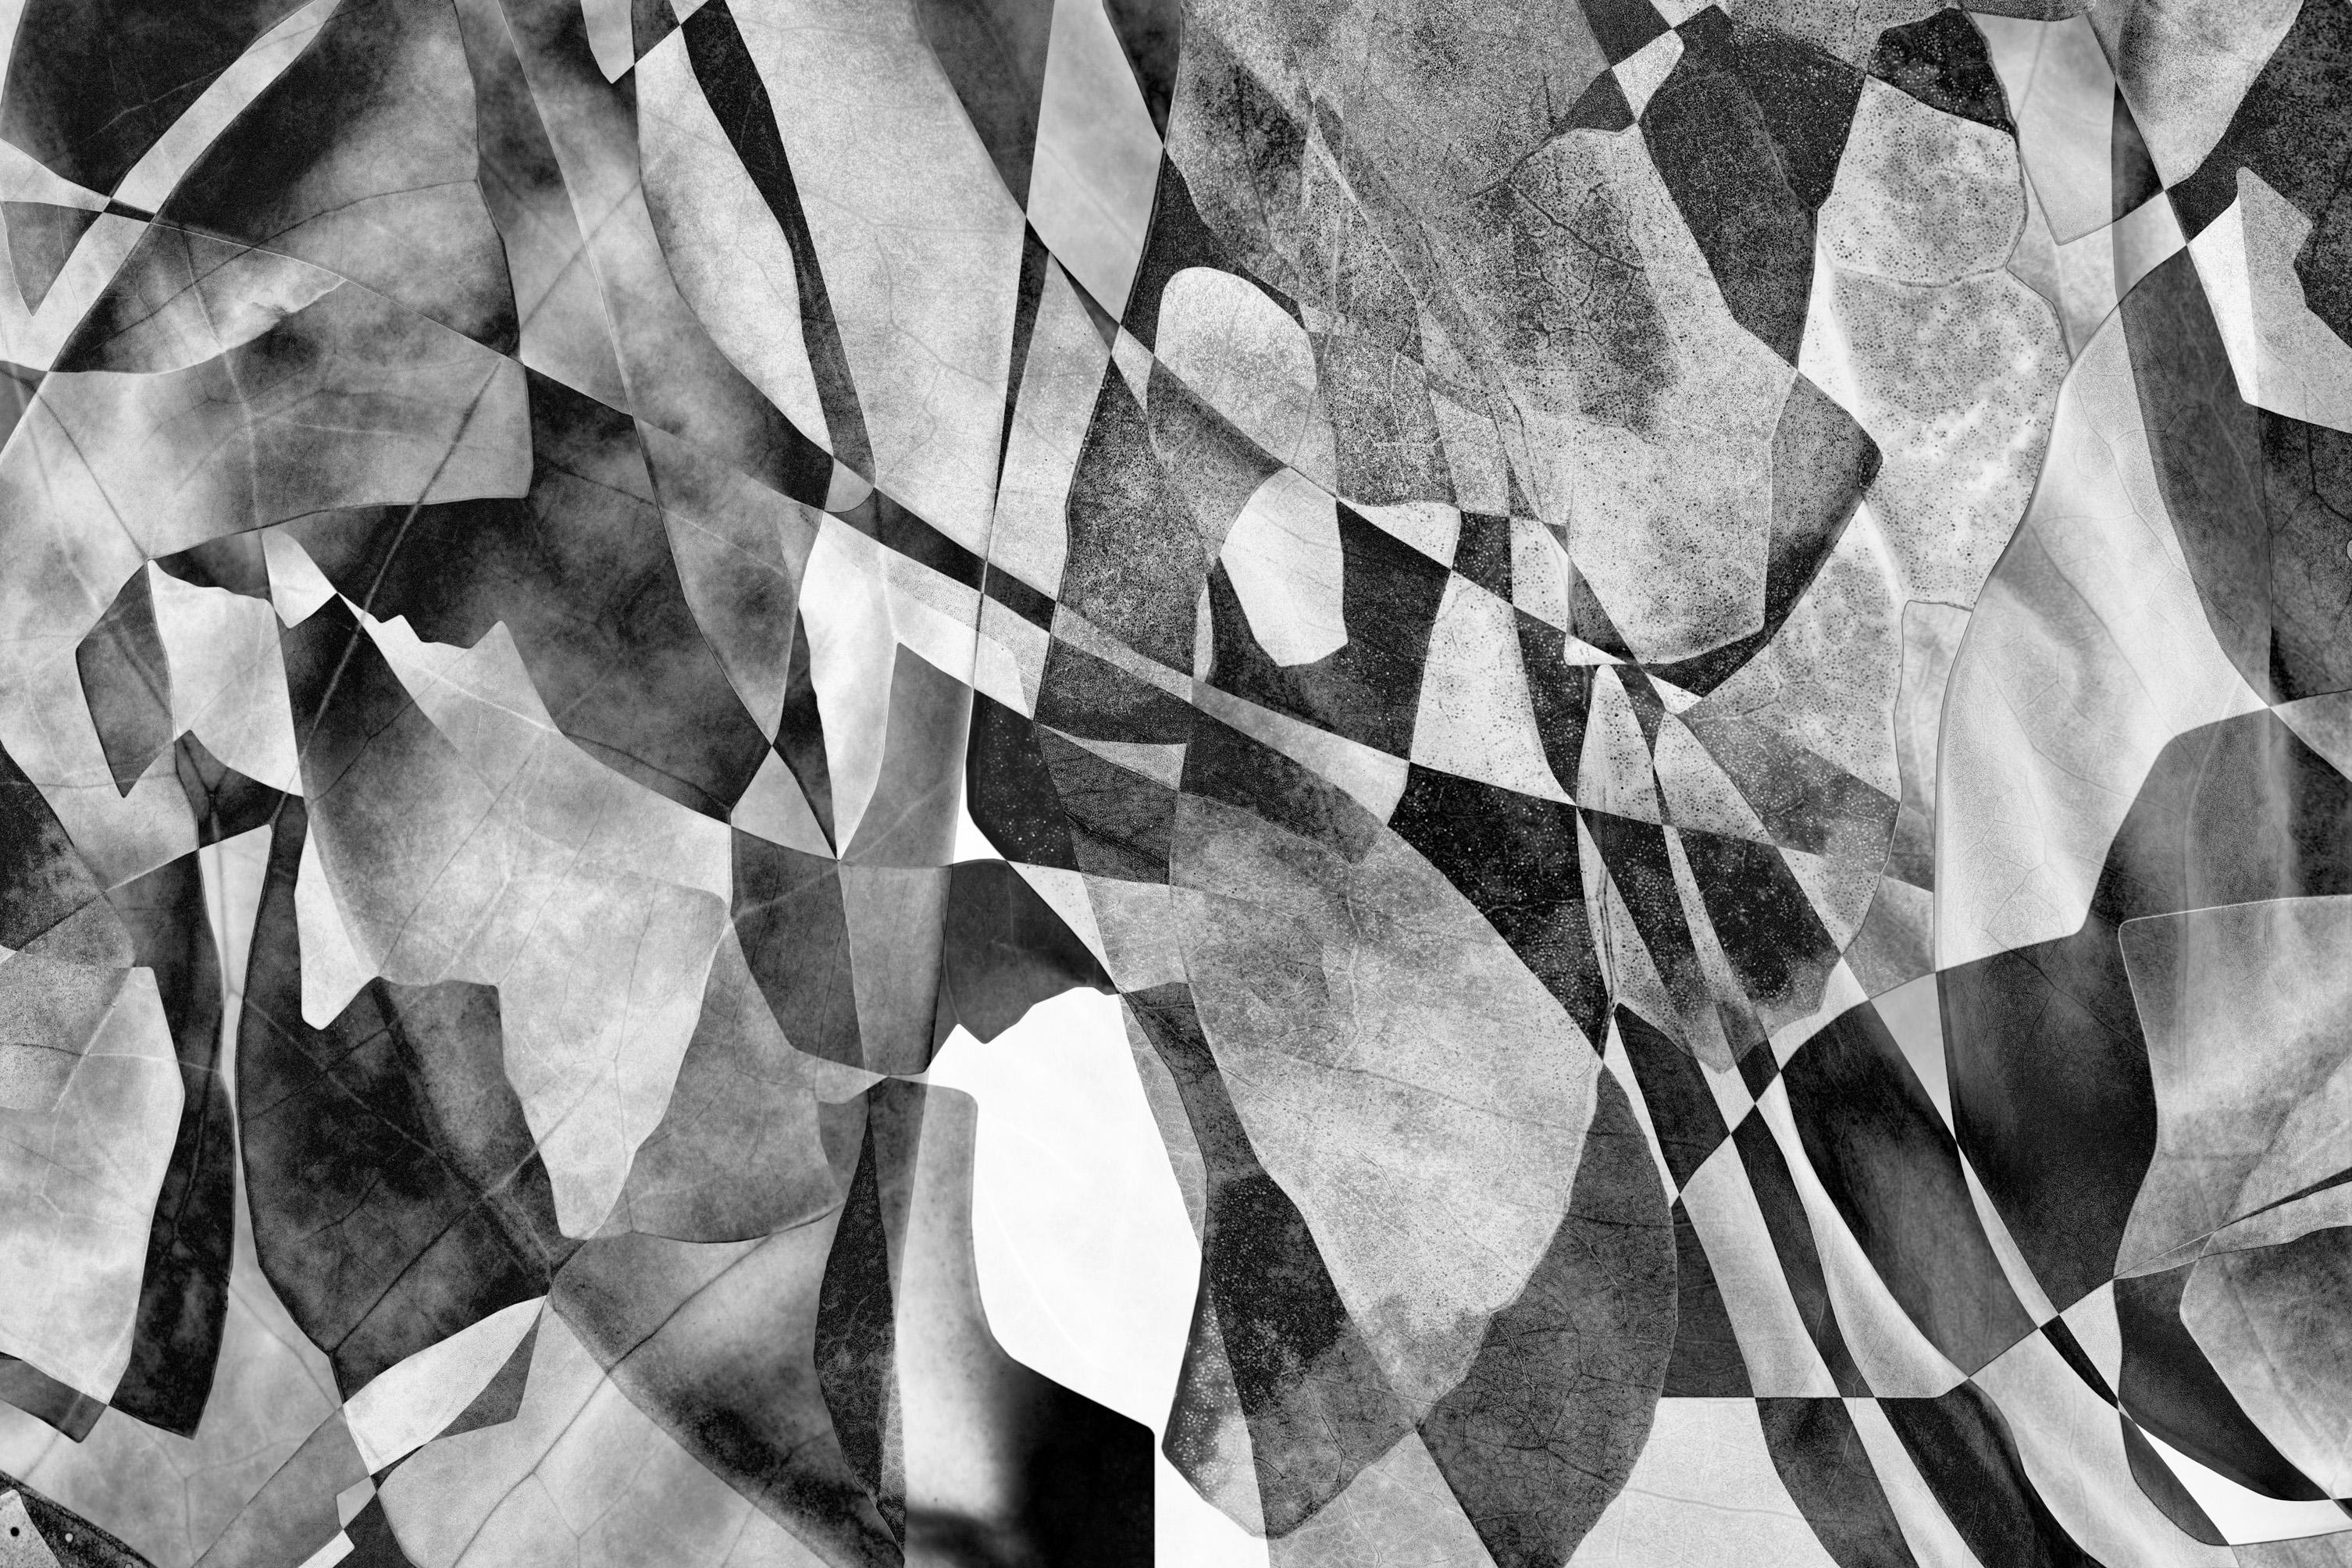 Feldforschung 07 - Contemporary Abstract Diamond Texture Photograph - Gray Black and White Photograph by Hubert Blanz